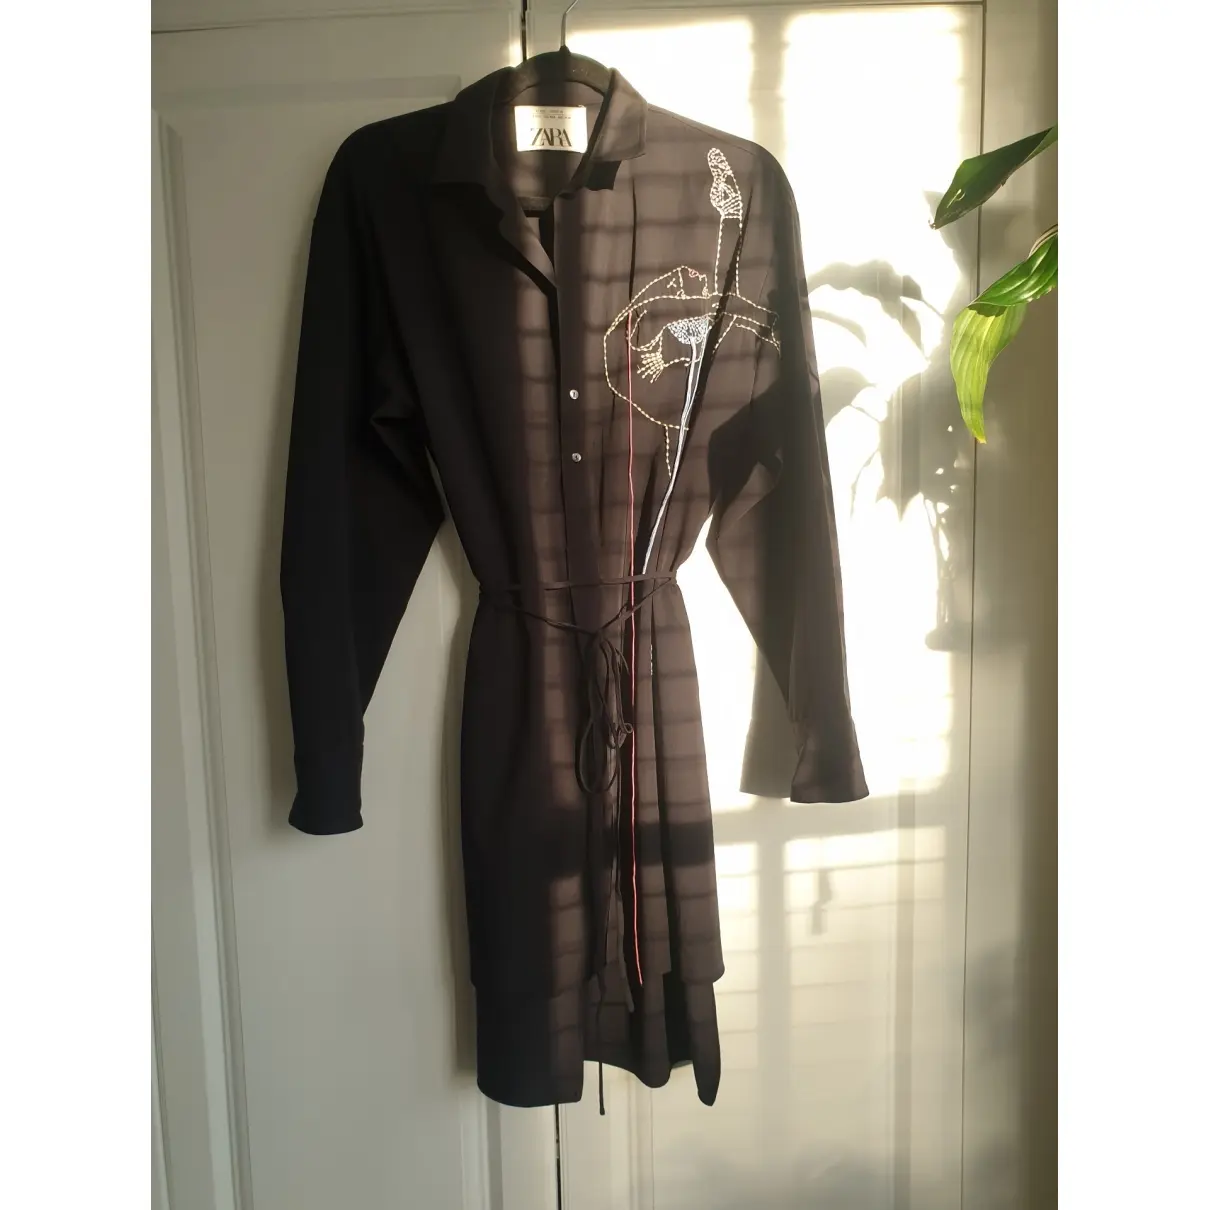 Zara Wool tunic for sale